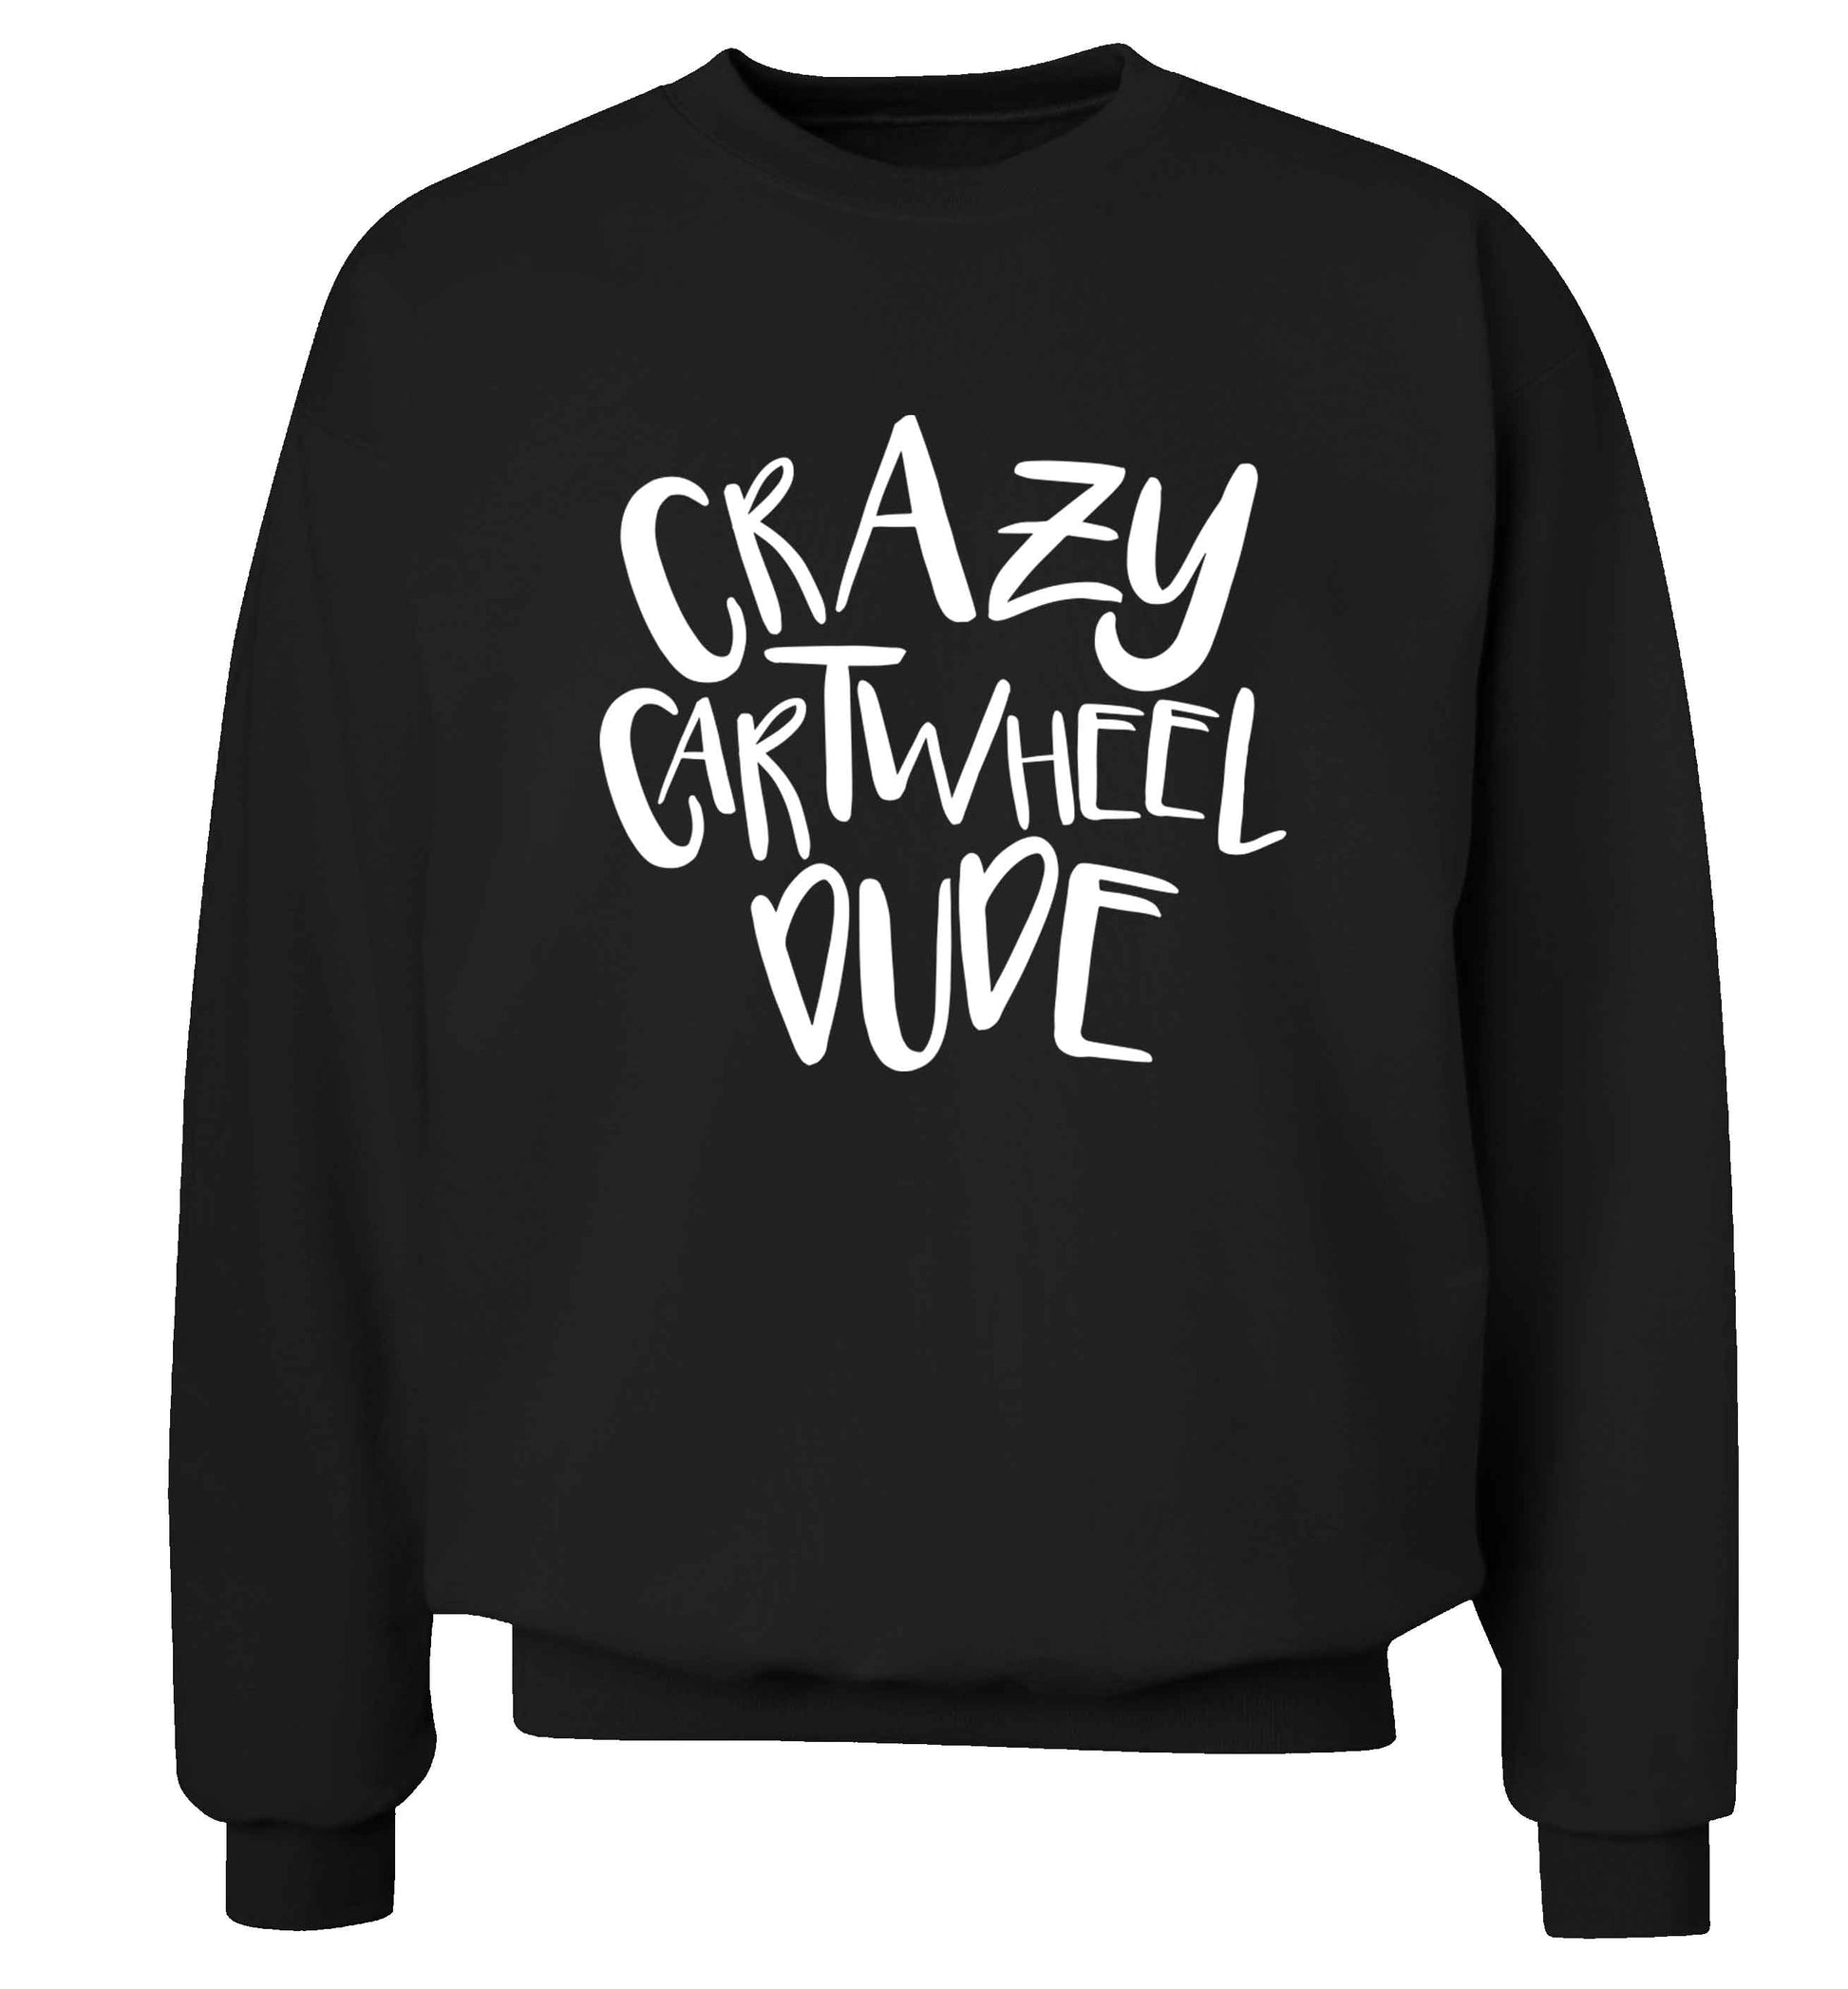 Crazy cartwheel dude Adult's unisex black Sweater 2XL